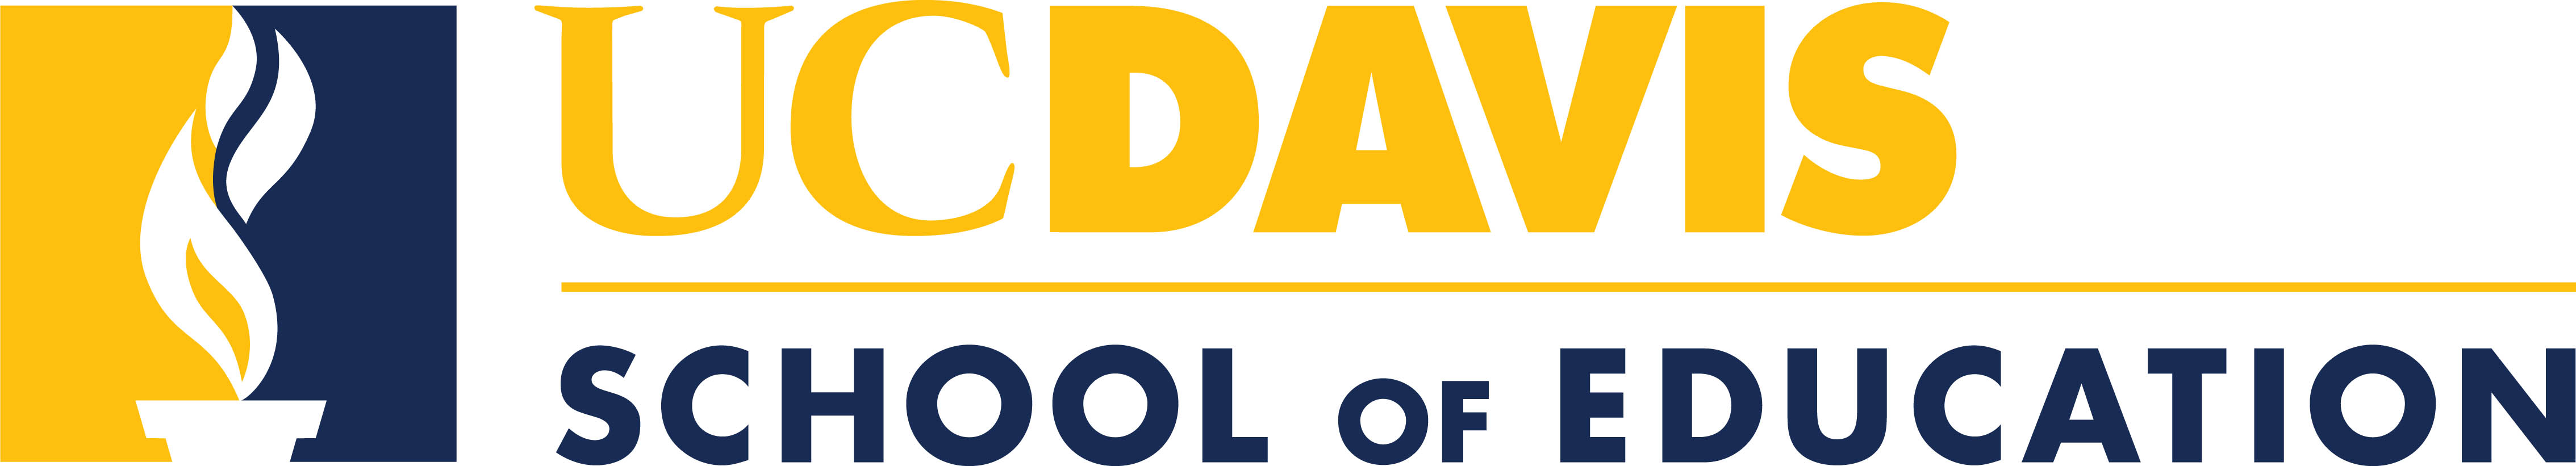 UC Davis School of Education home page